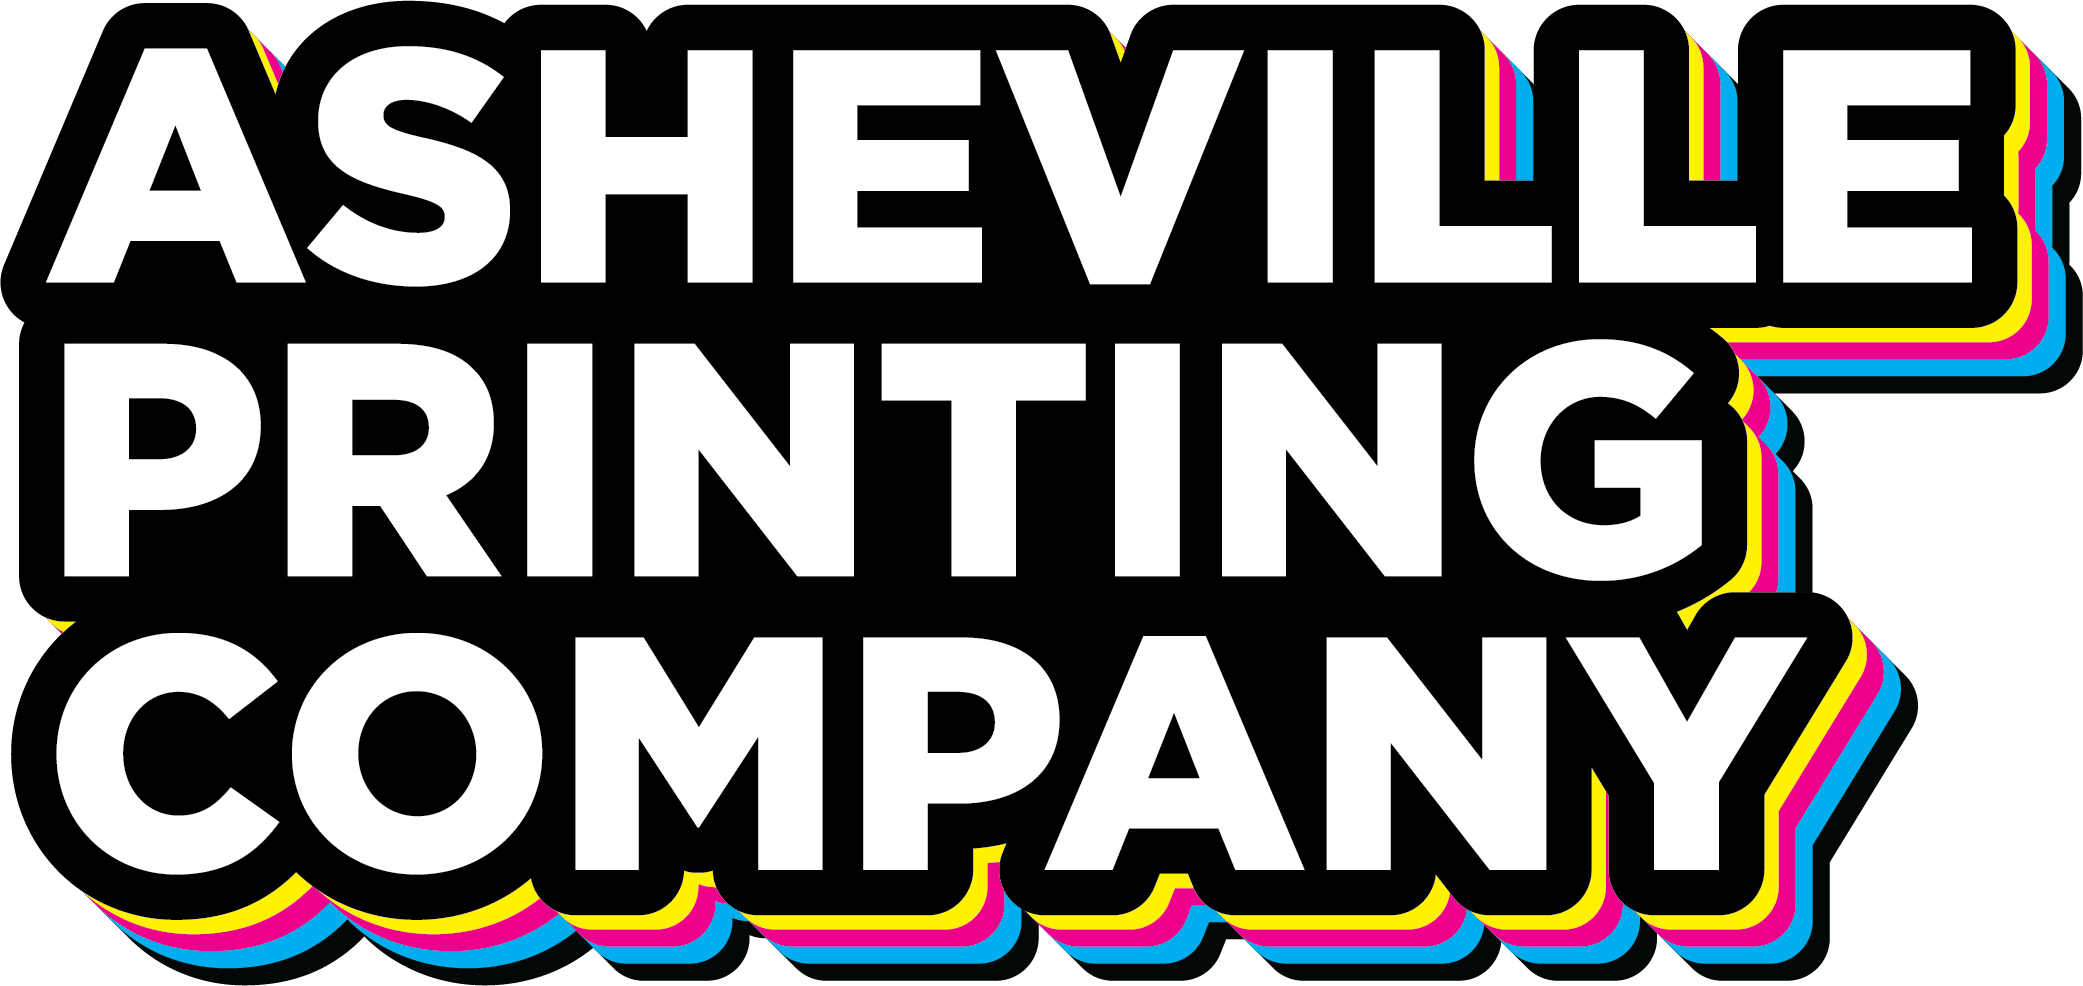 Asheville Printing Company